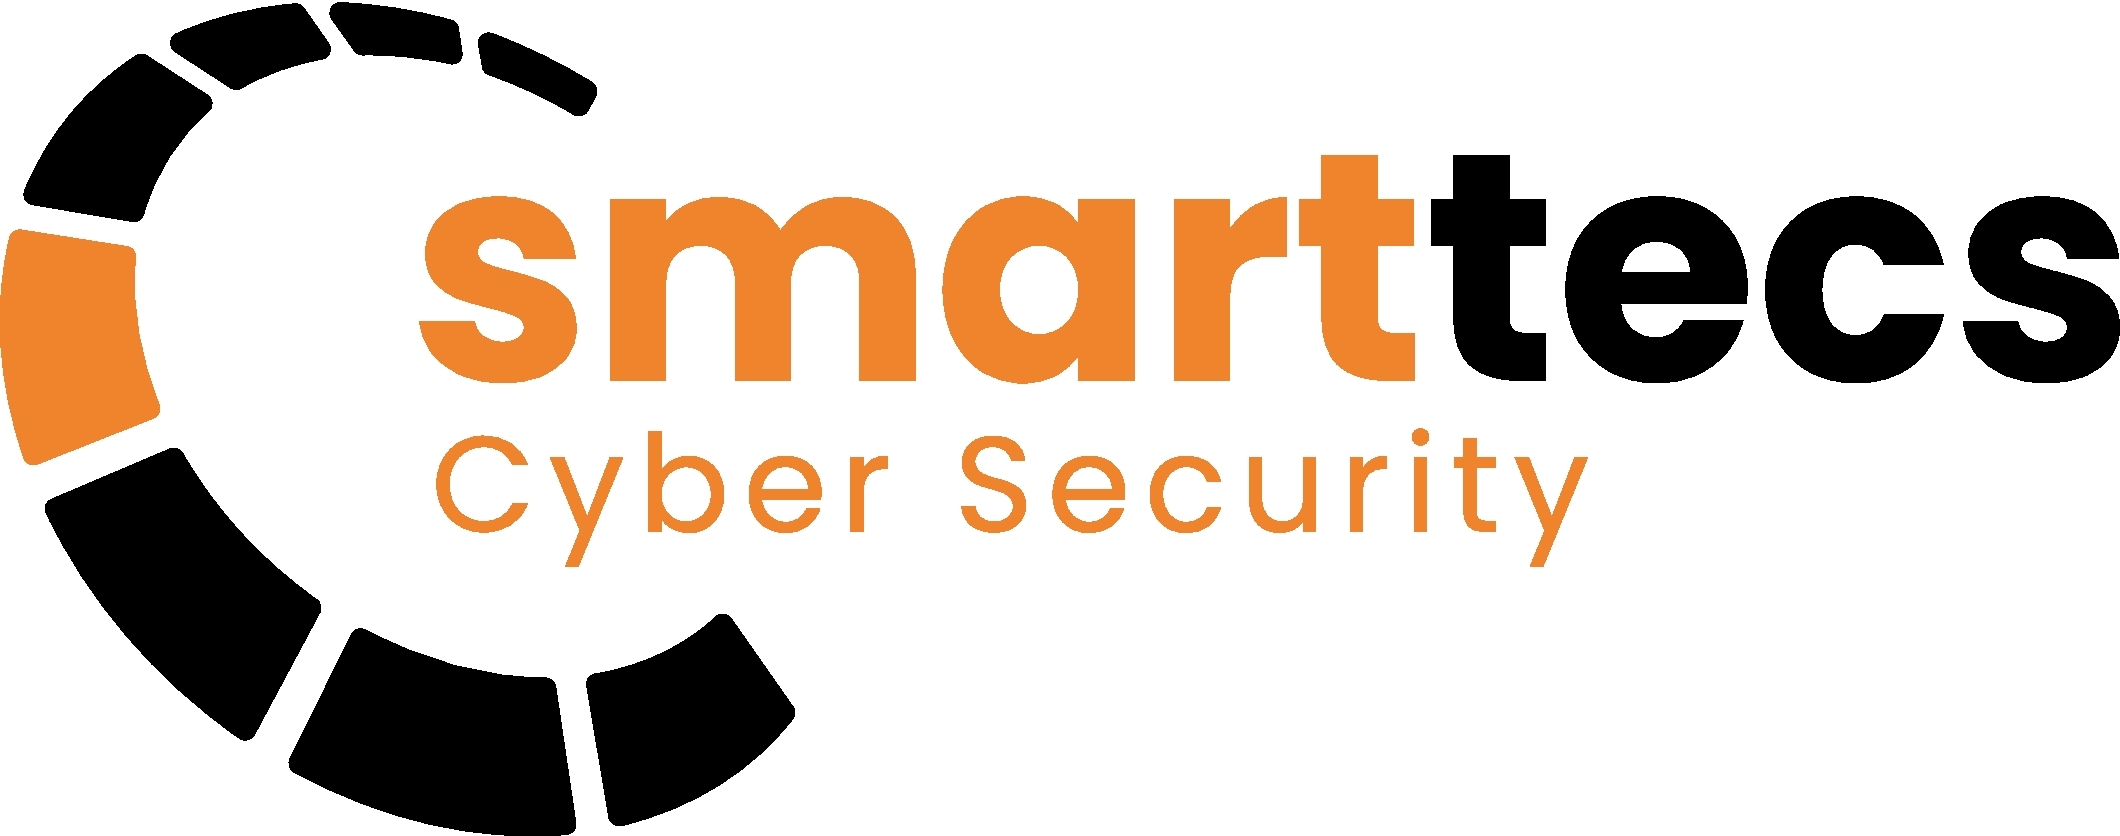 SmartTECS Cyber Security logo